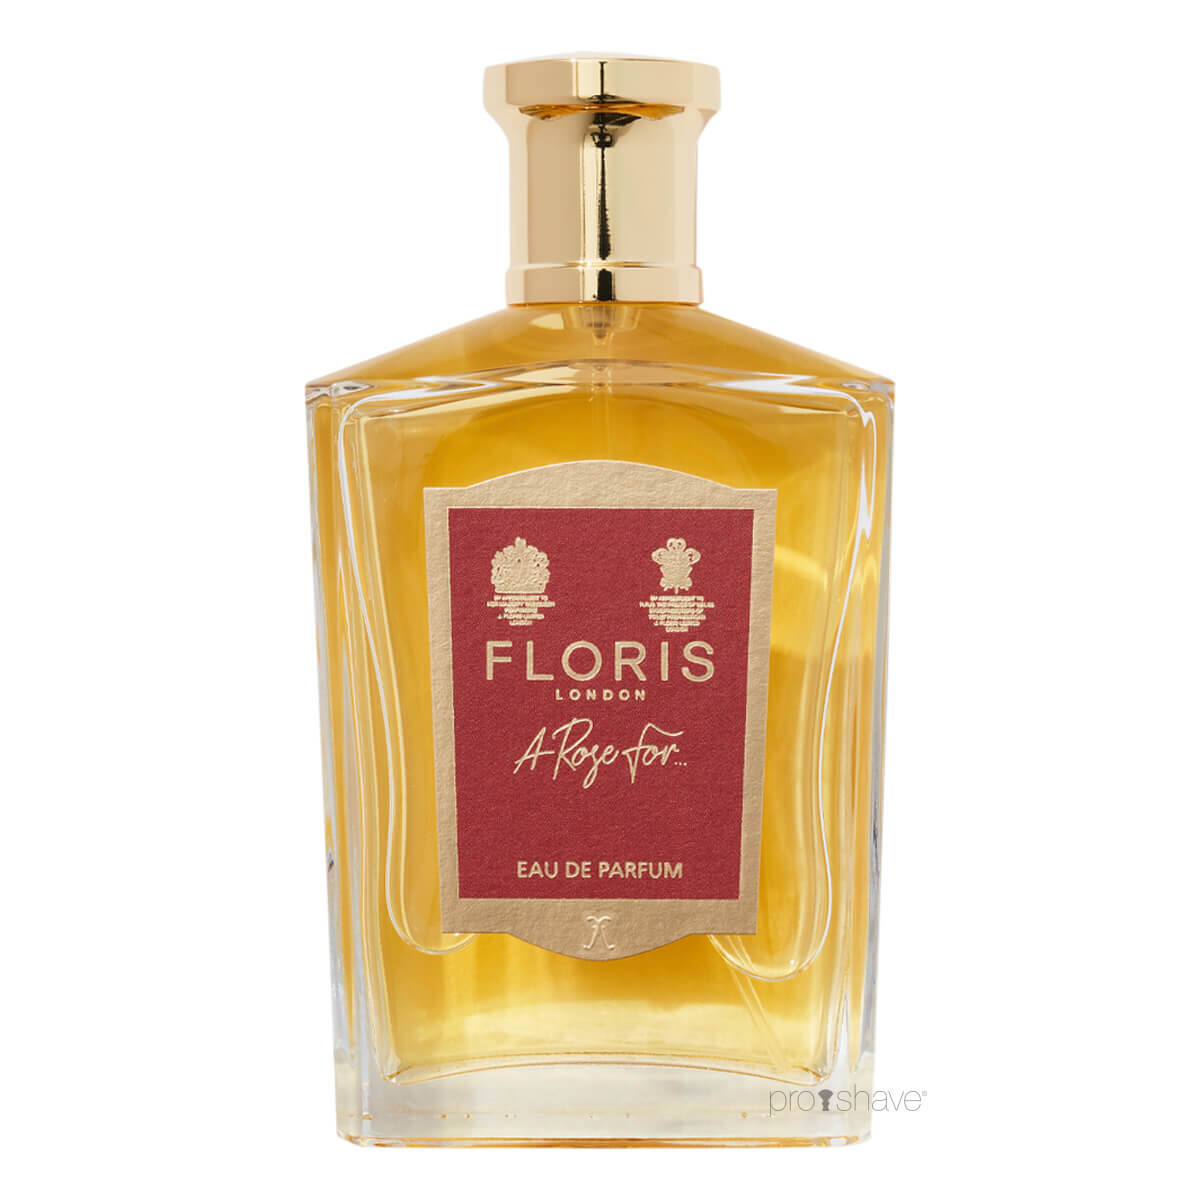 Floris A Rose Forâ¦, Eau de Parfum, 100 ml.